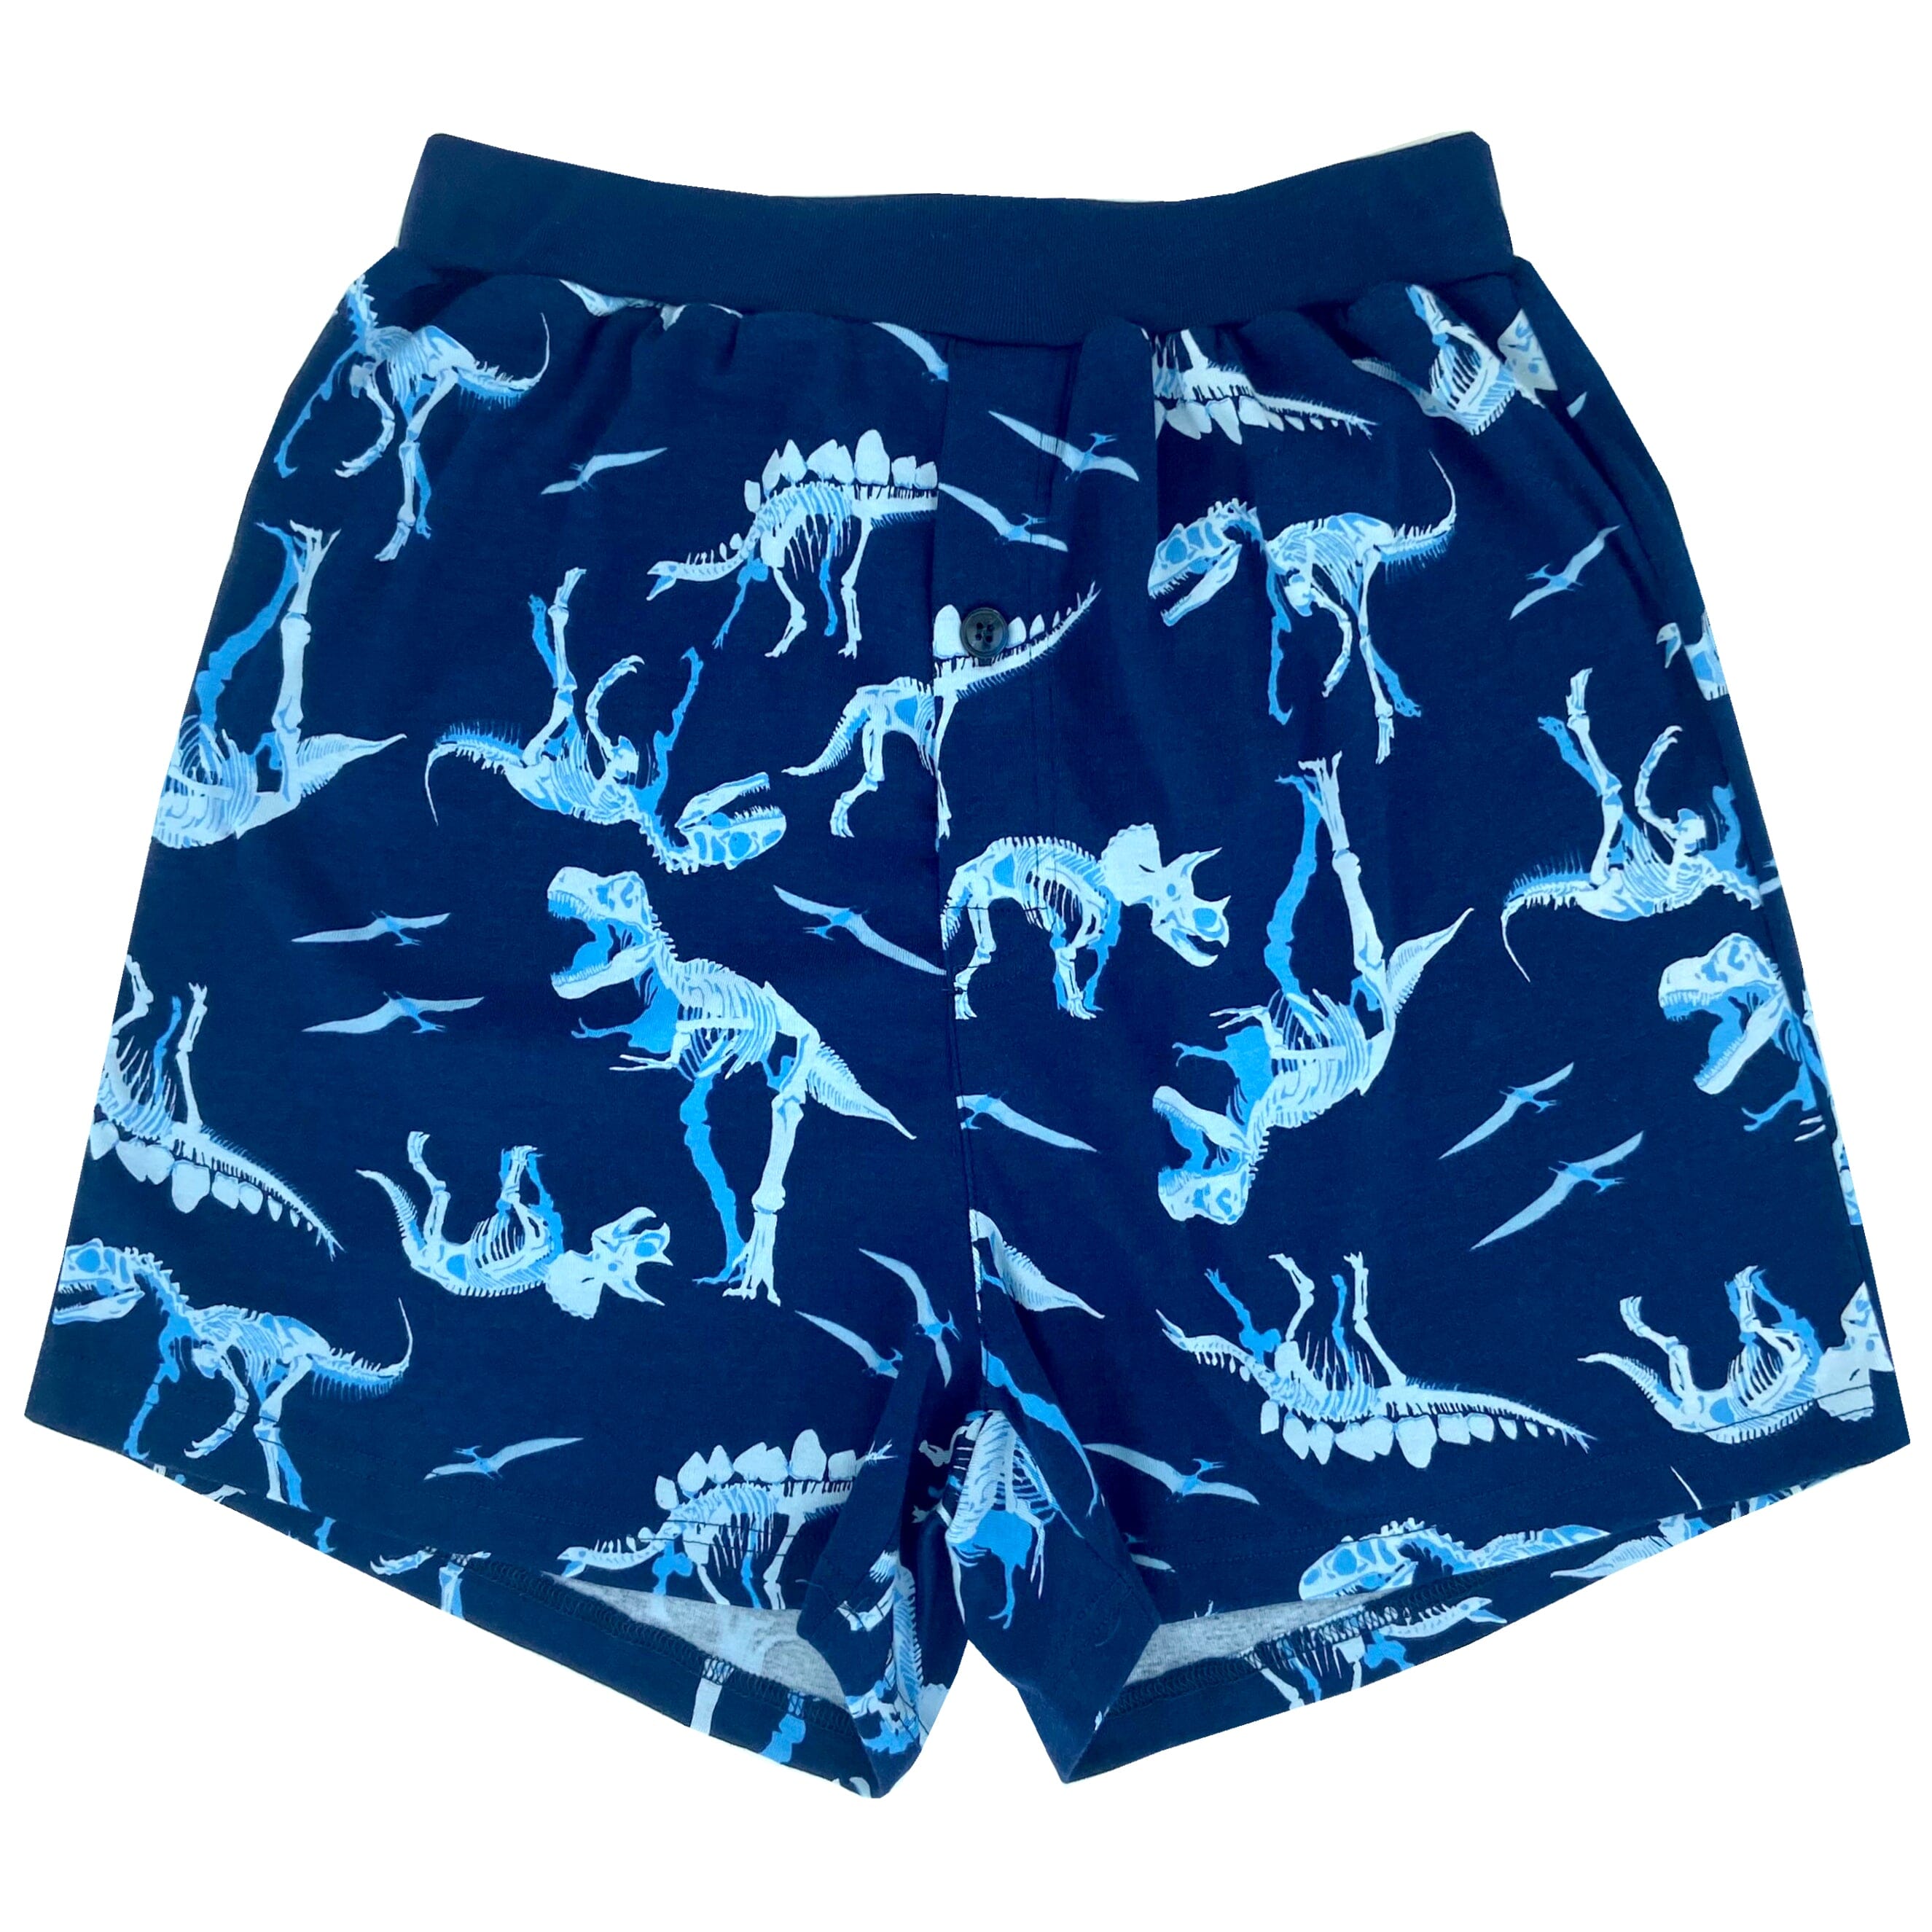 Men's Dinosaur Fossil Bones Patterned Cotton Knit Pyjama Sleep Shorts